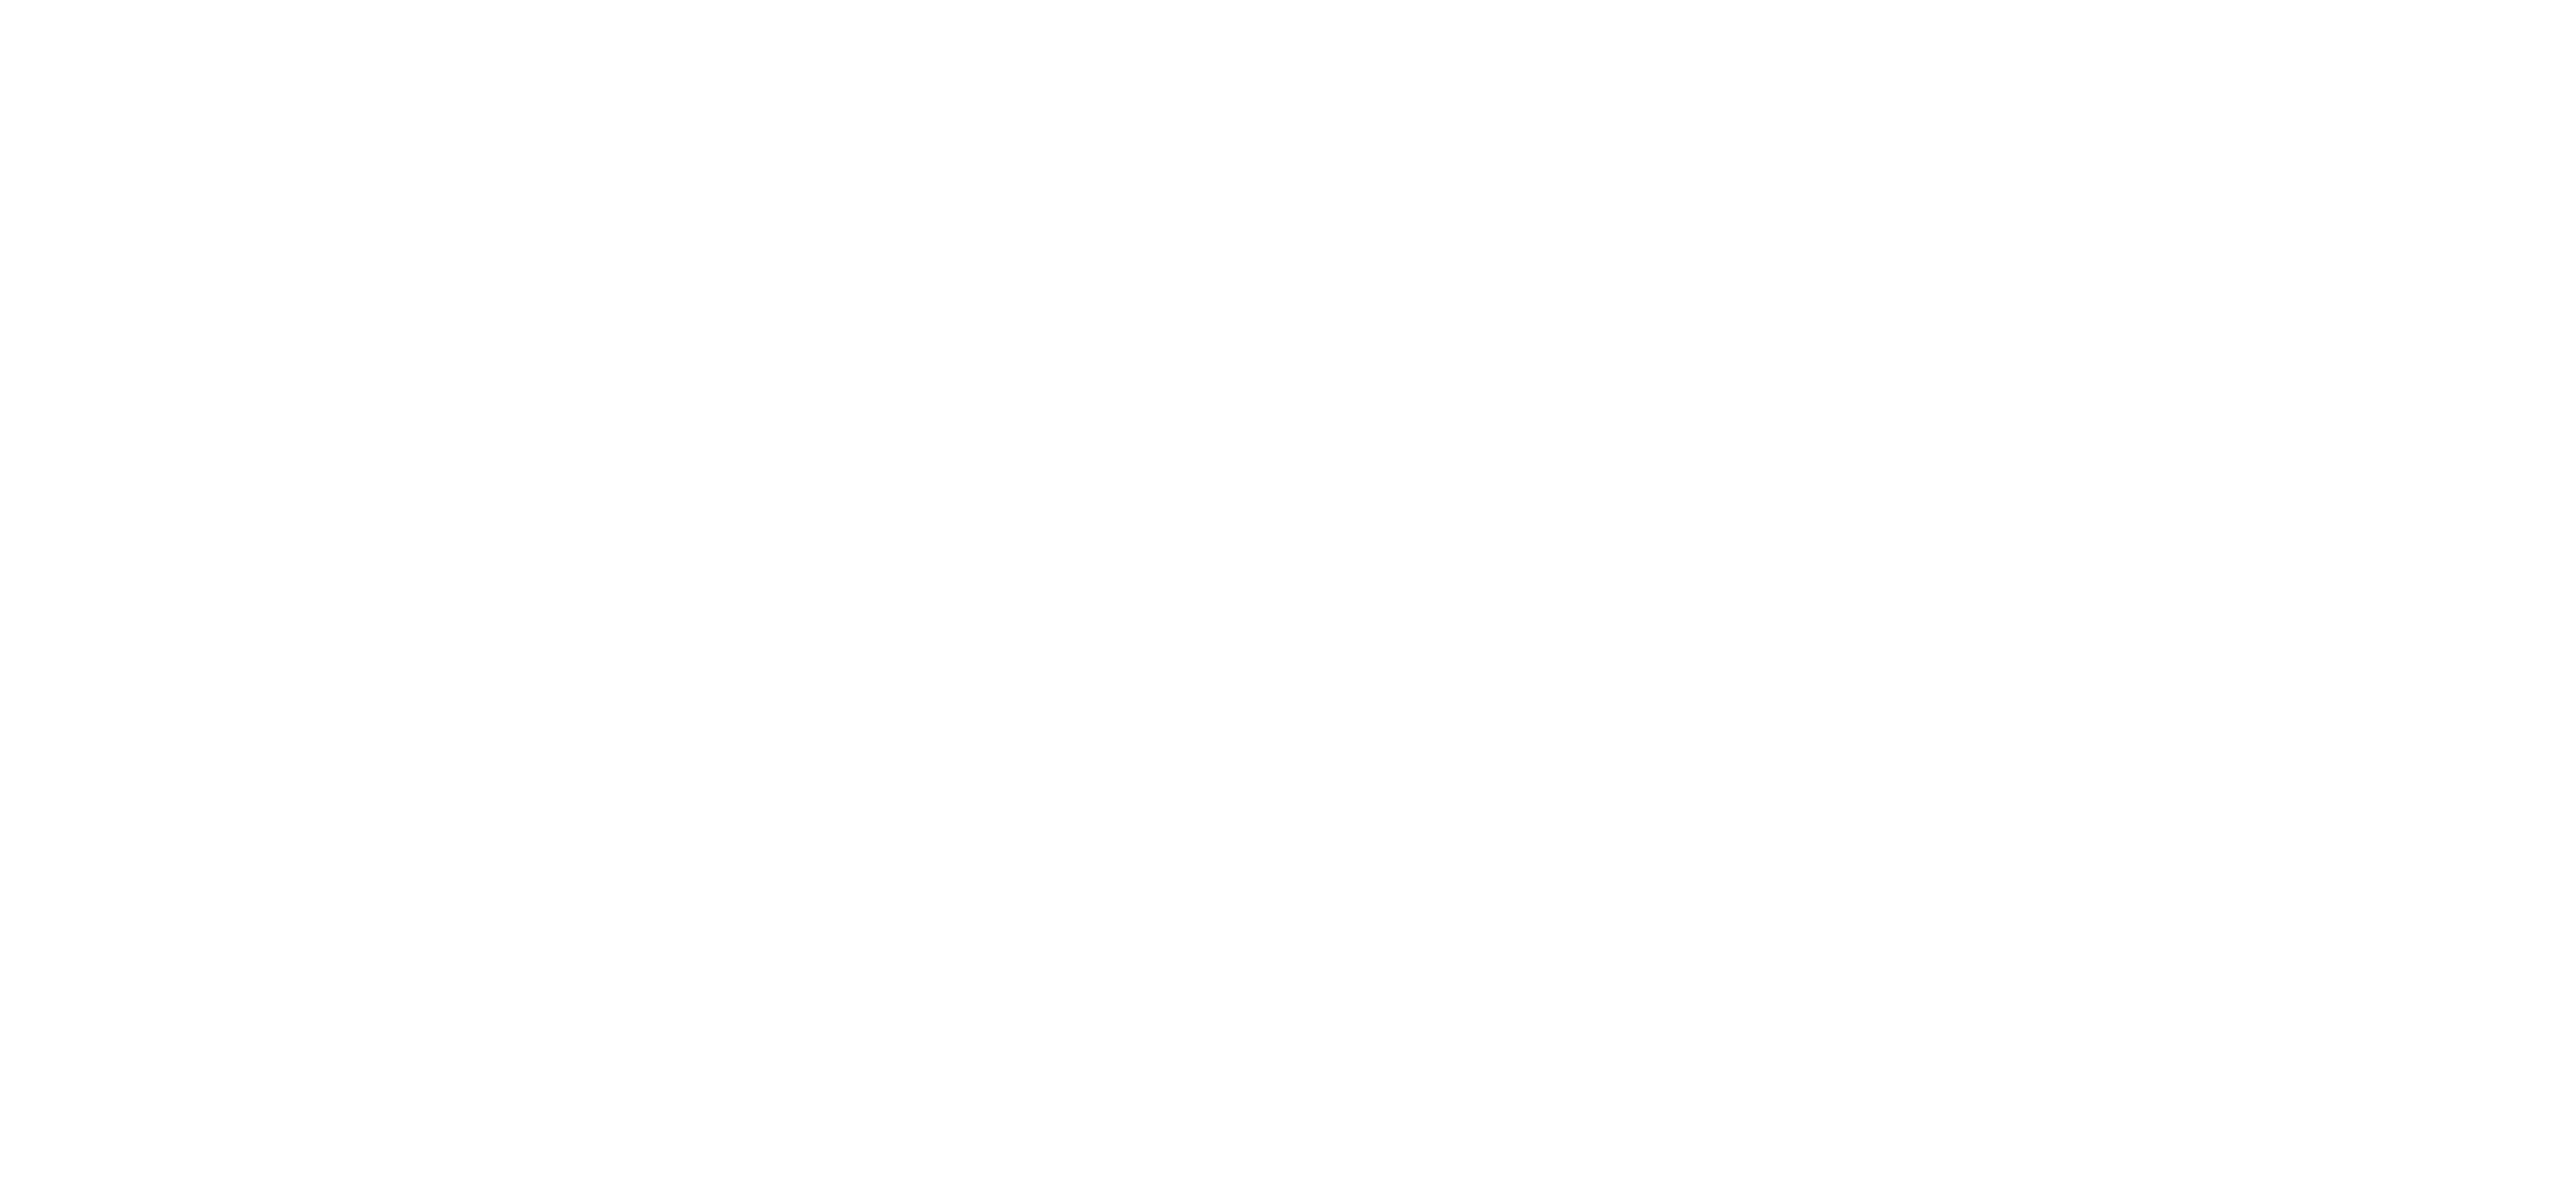 VHwhite logo transparent background